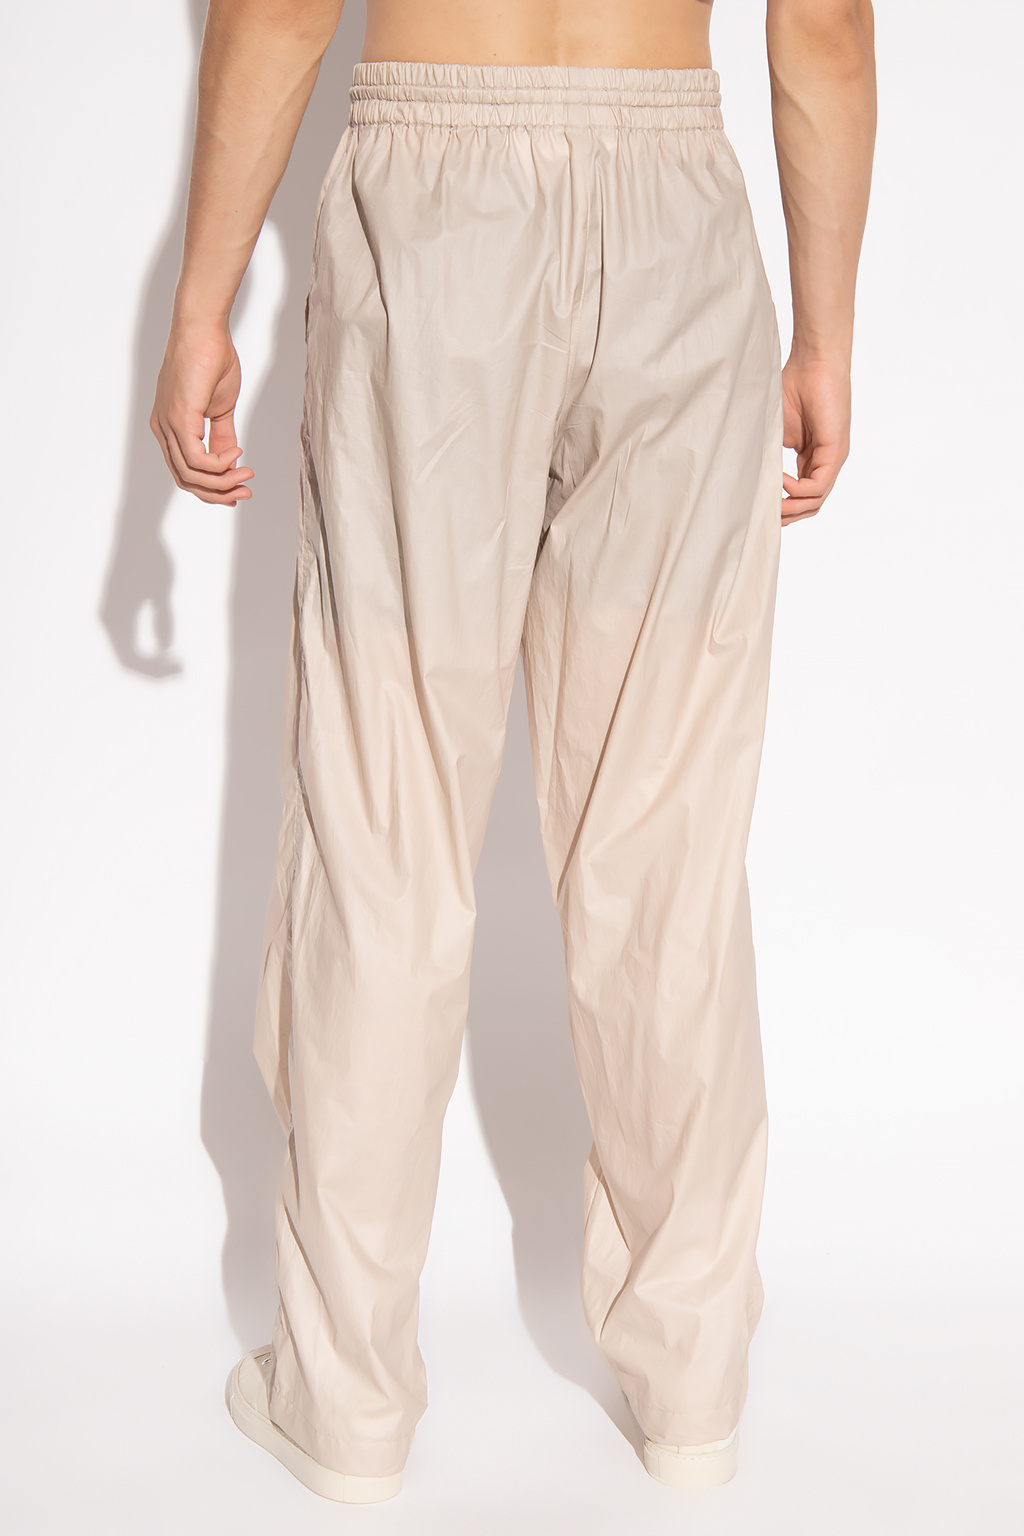 Isabel Marant ‘Kristan’ trousers